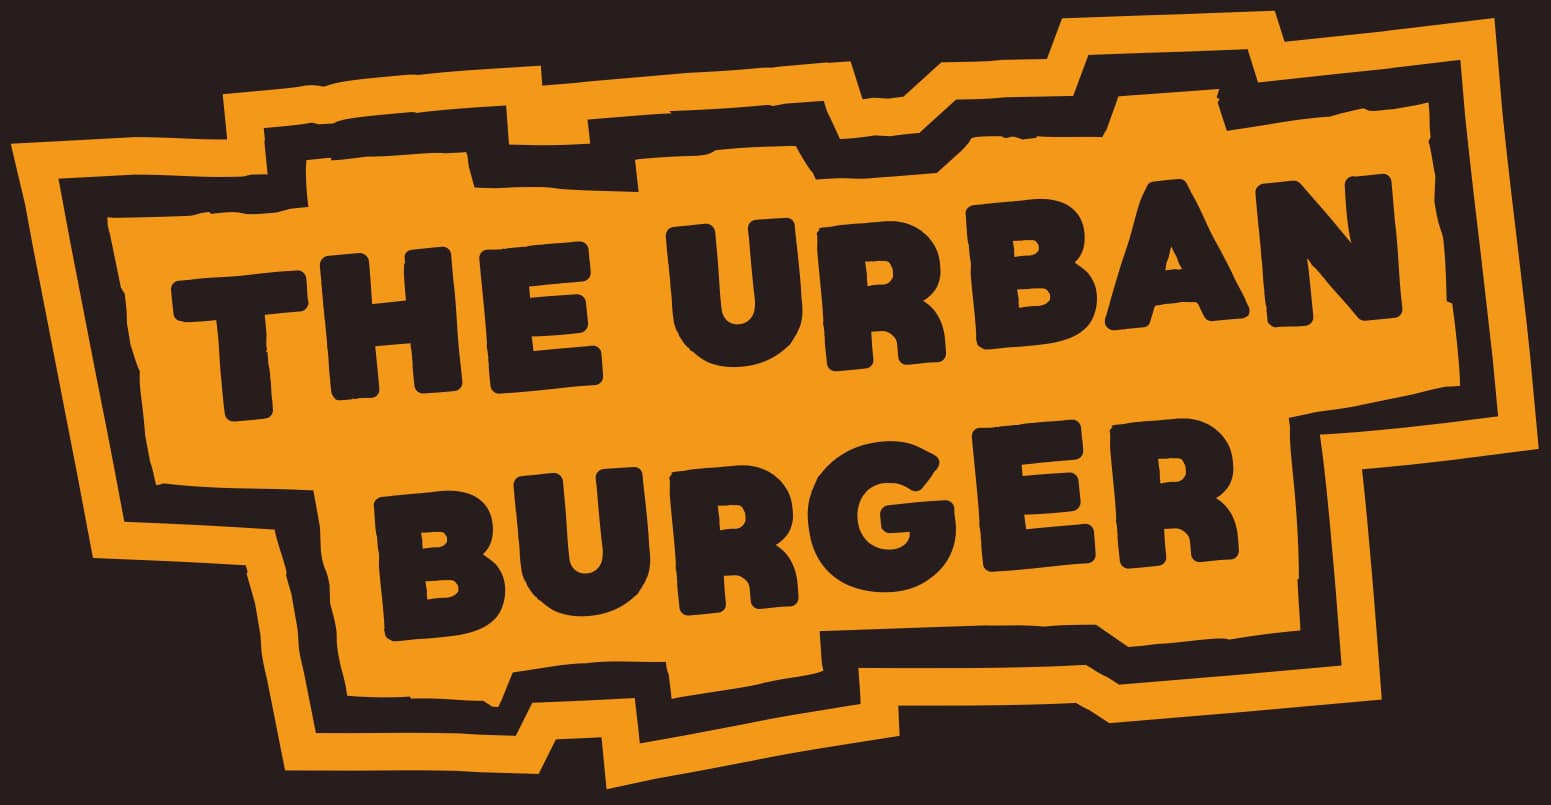 The Urban Burger